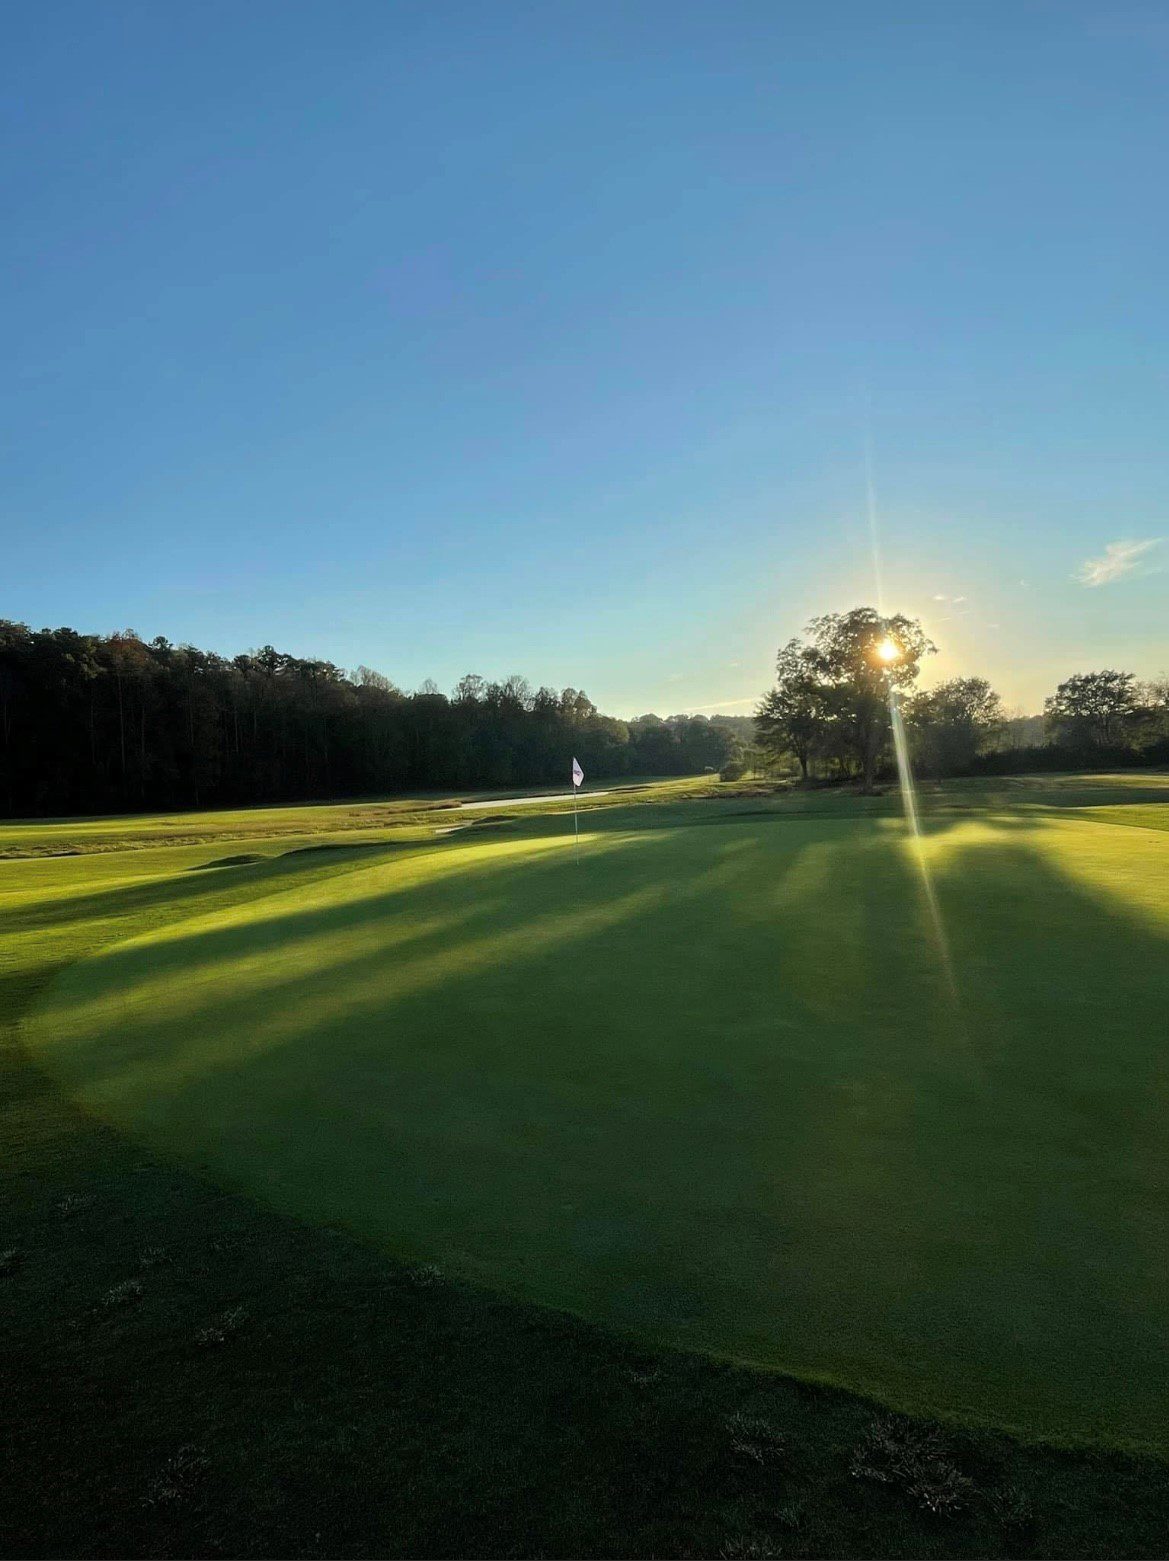 Old Union Golf Course
Blairsville, GA